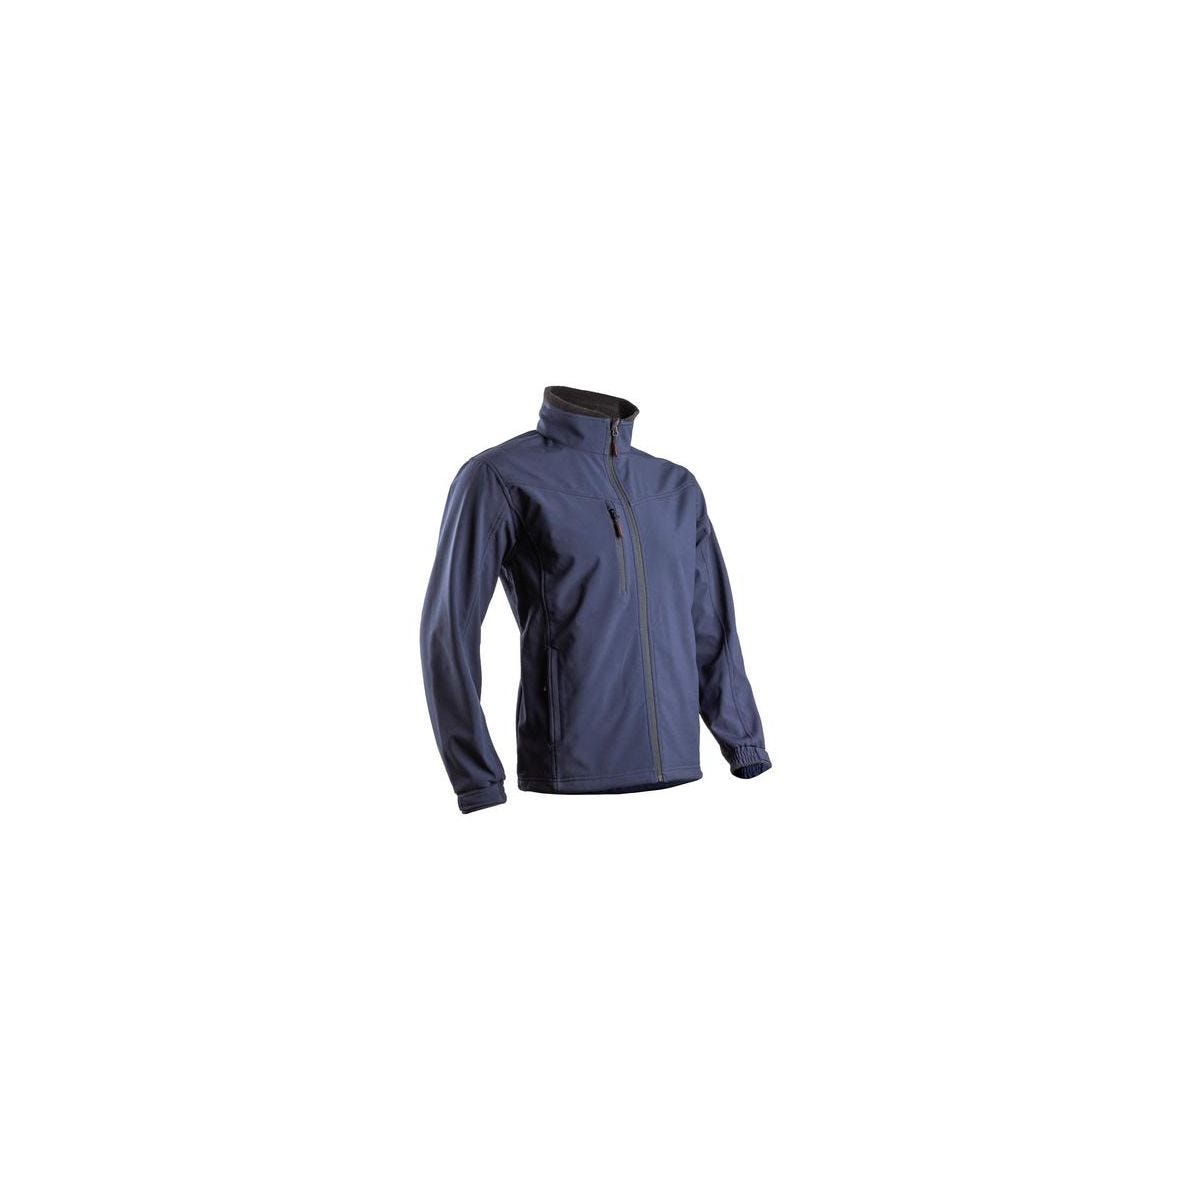 Veste Softshell YANG II Bleu - Coverguard - Taille S 0